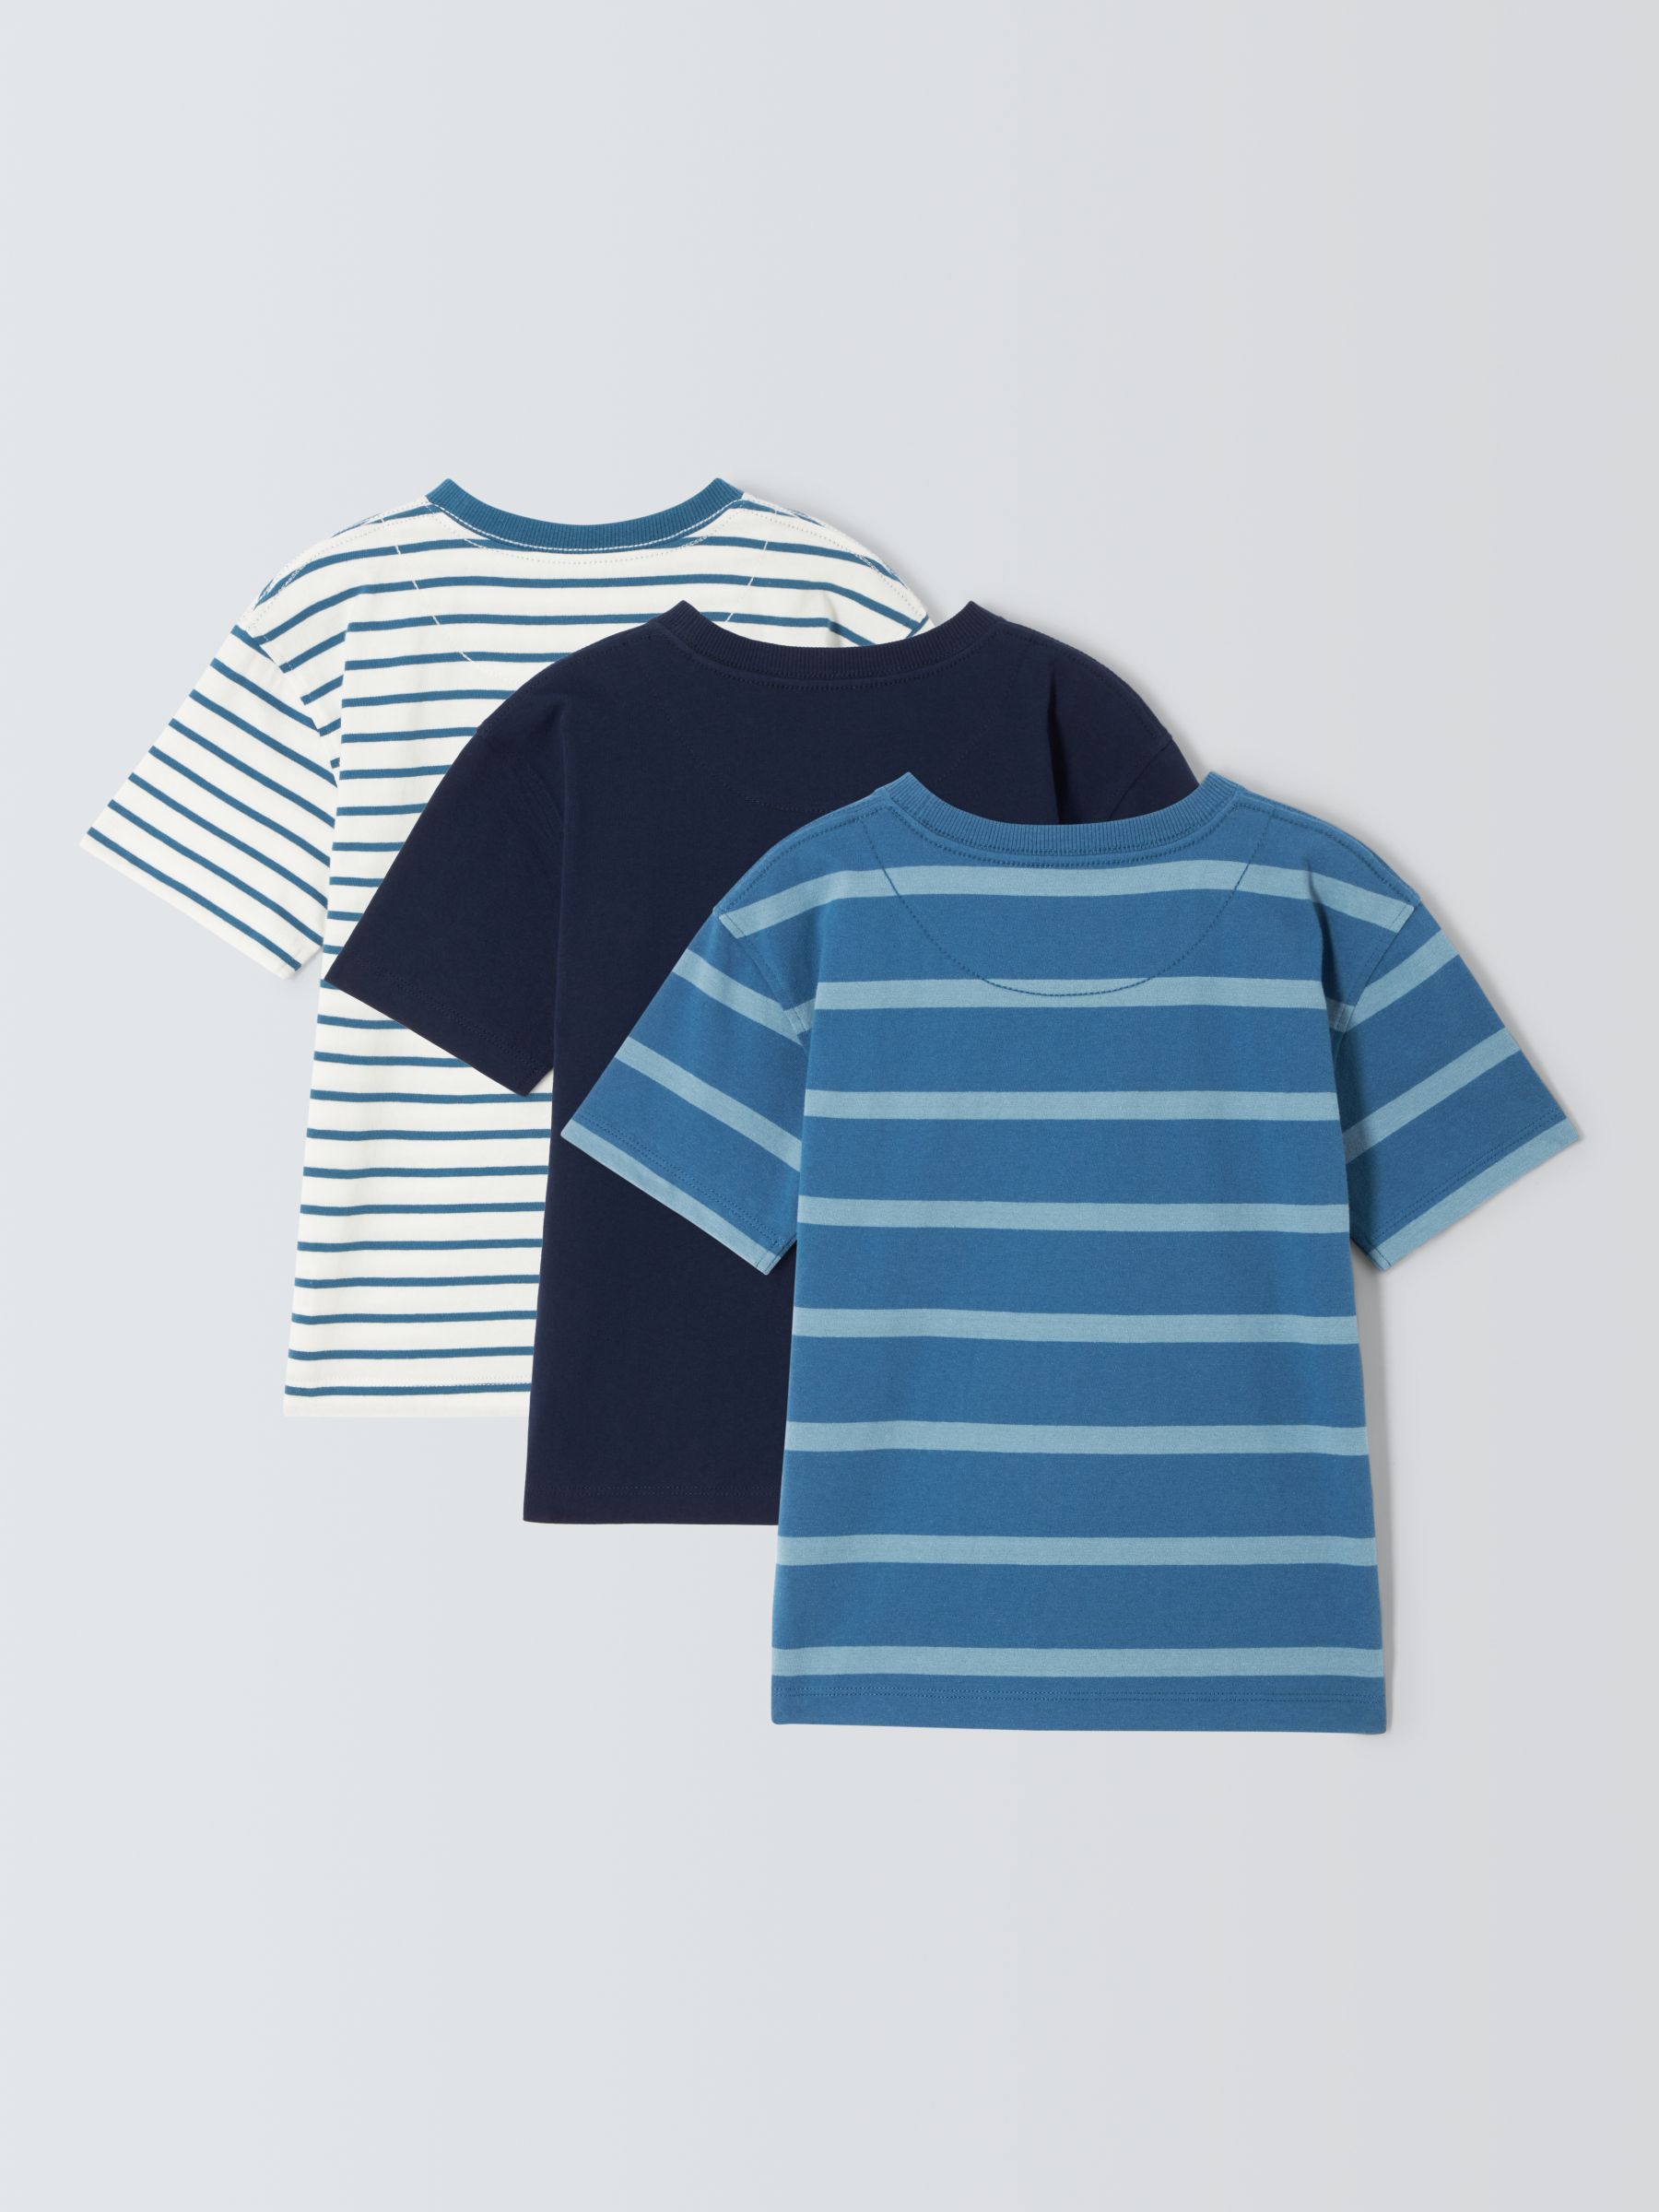 John Lewis Kids' Plain/Stripe T-Shirts, Pack of 3, Blue/Multi, 7 years